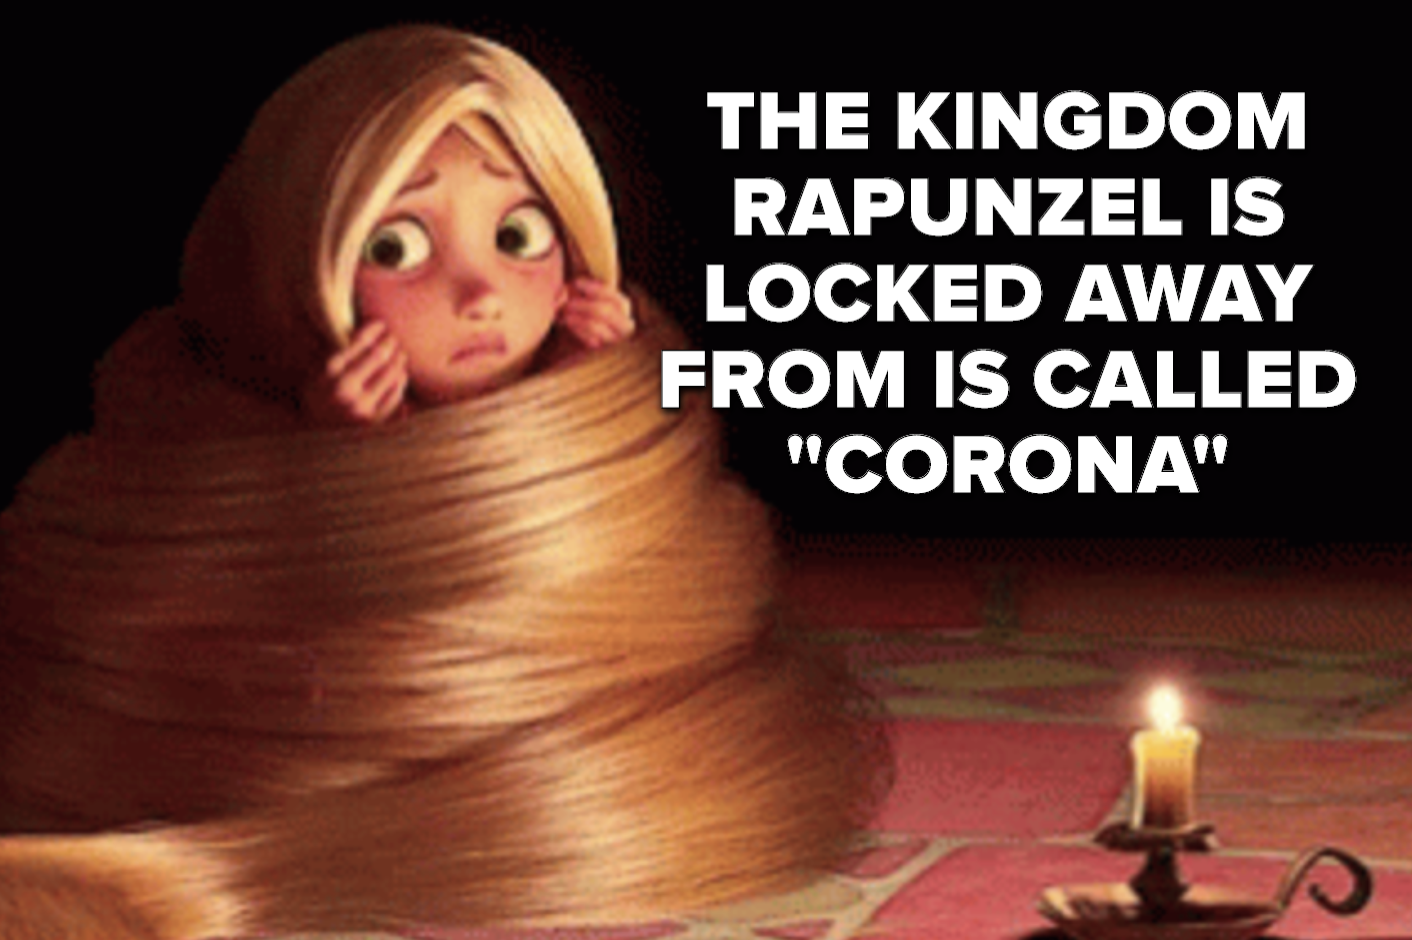 town rapunzel lives in